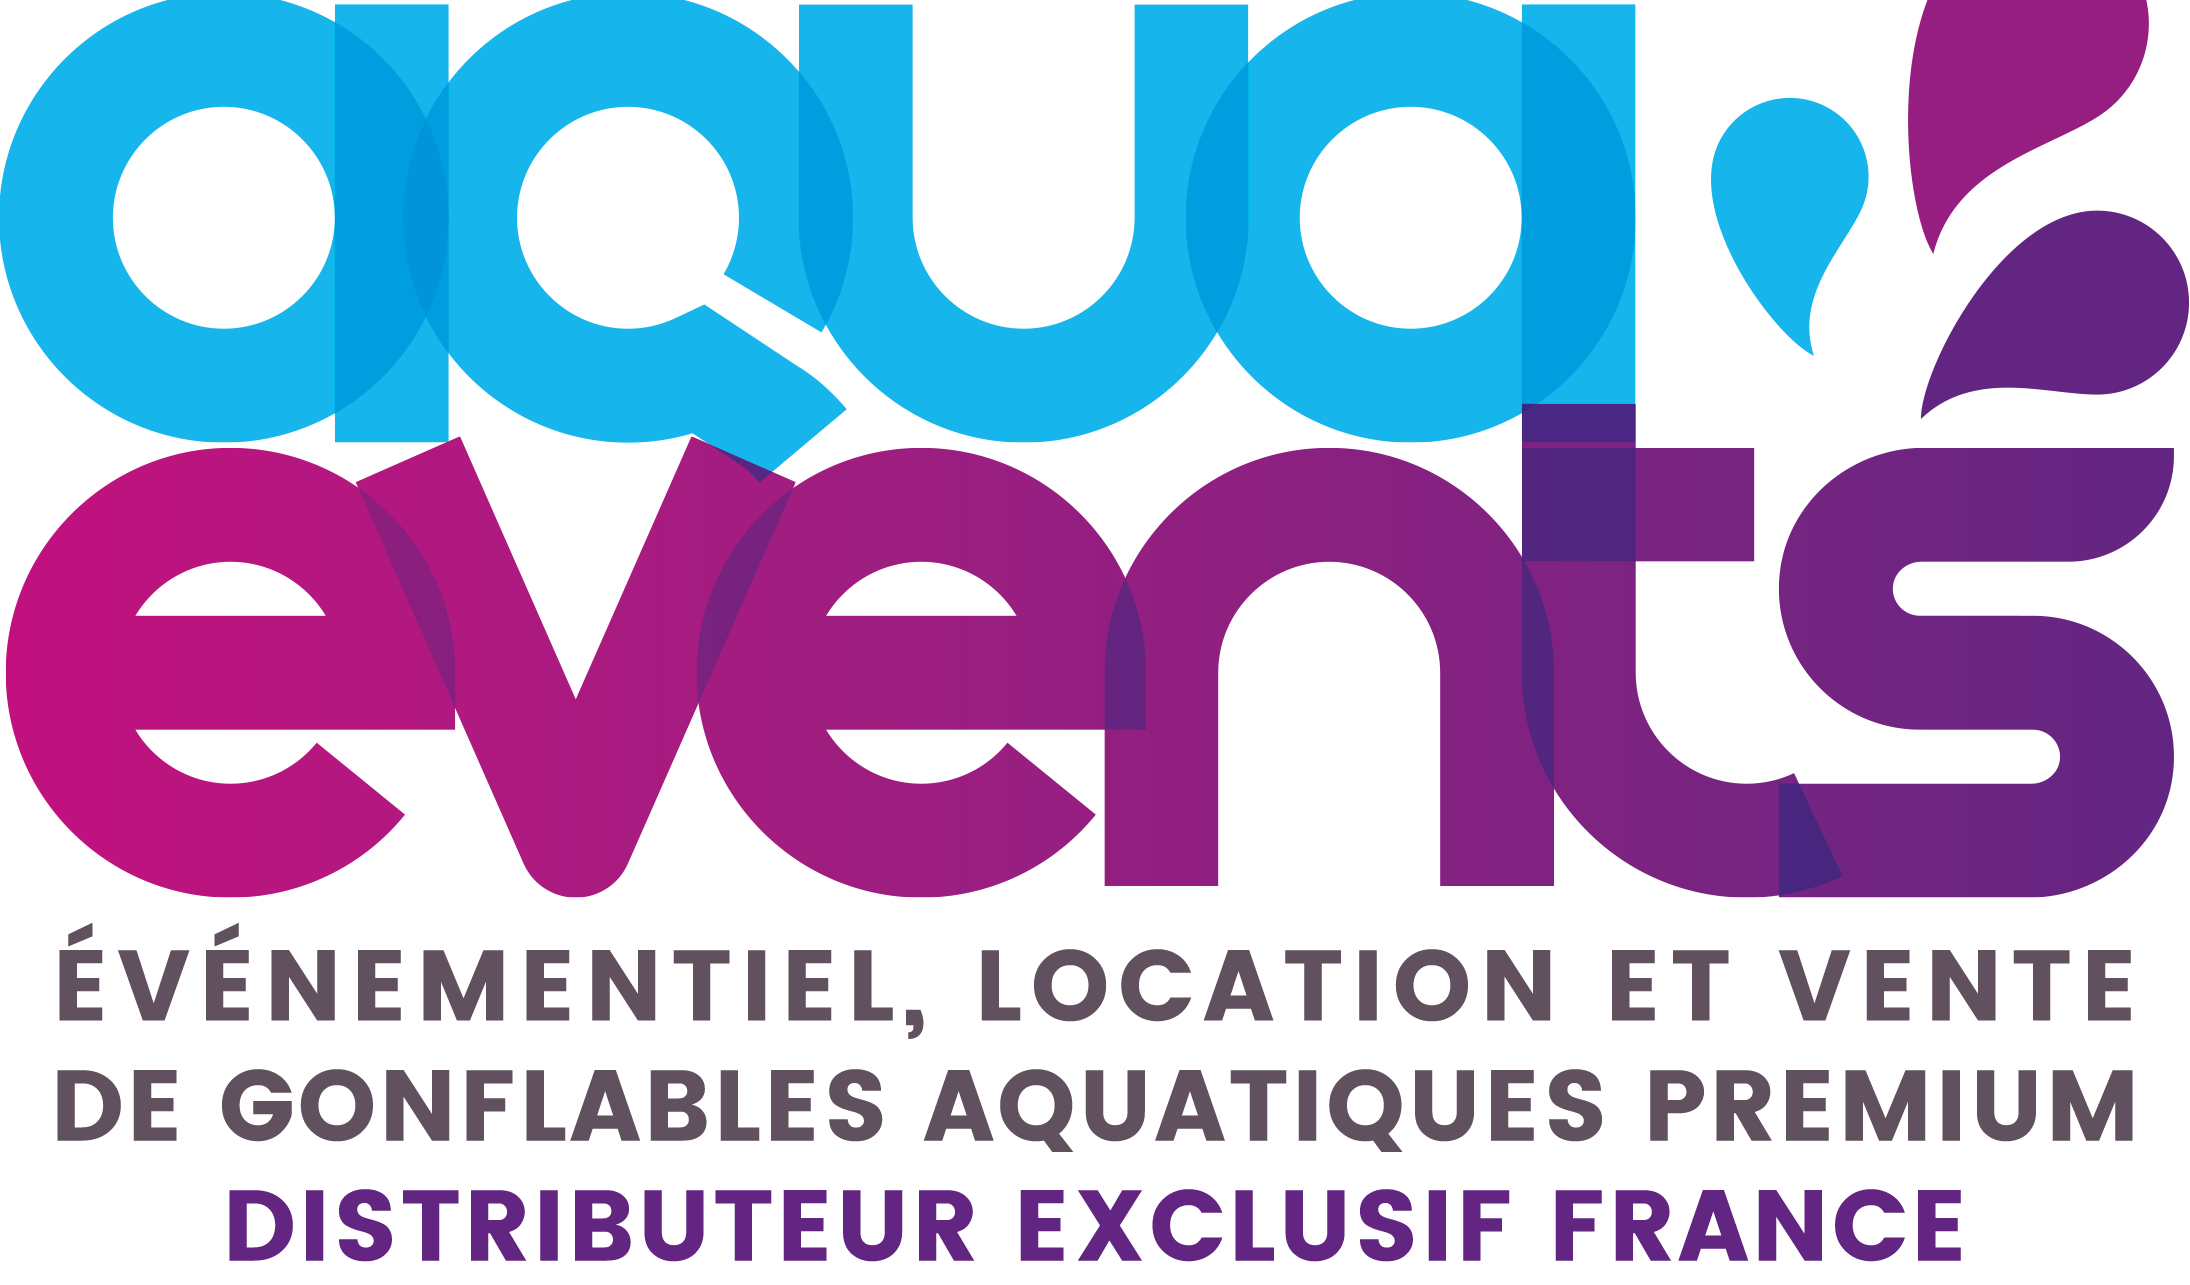 AquaEvents-logo location distributeur exclusif france violet